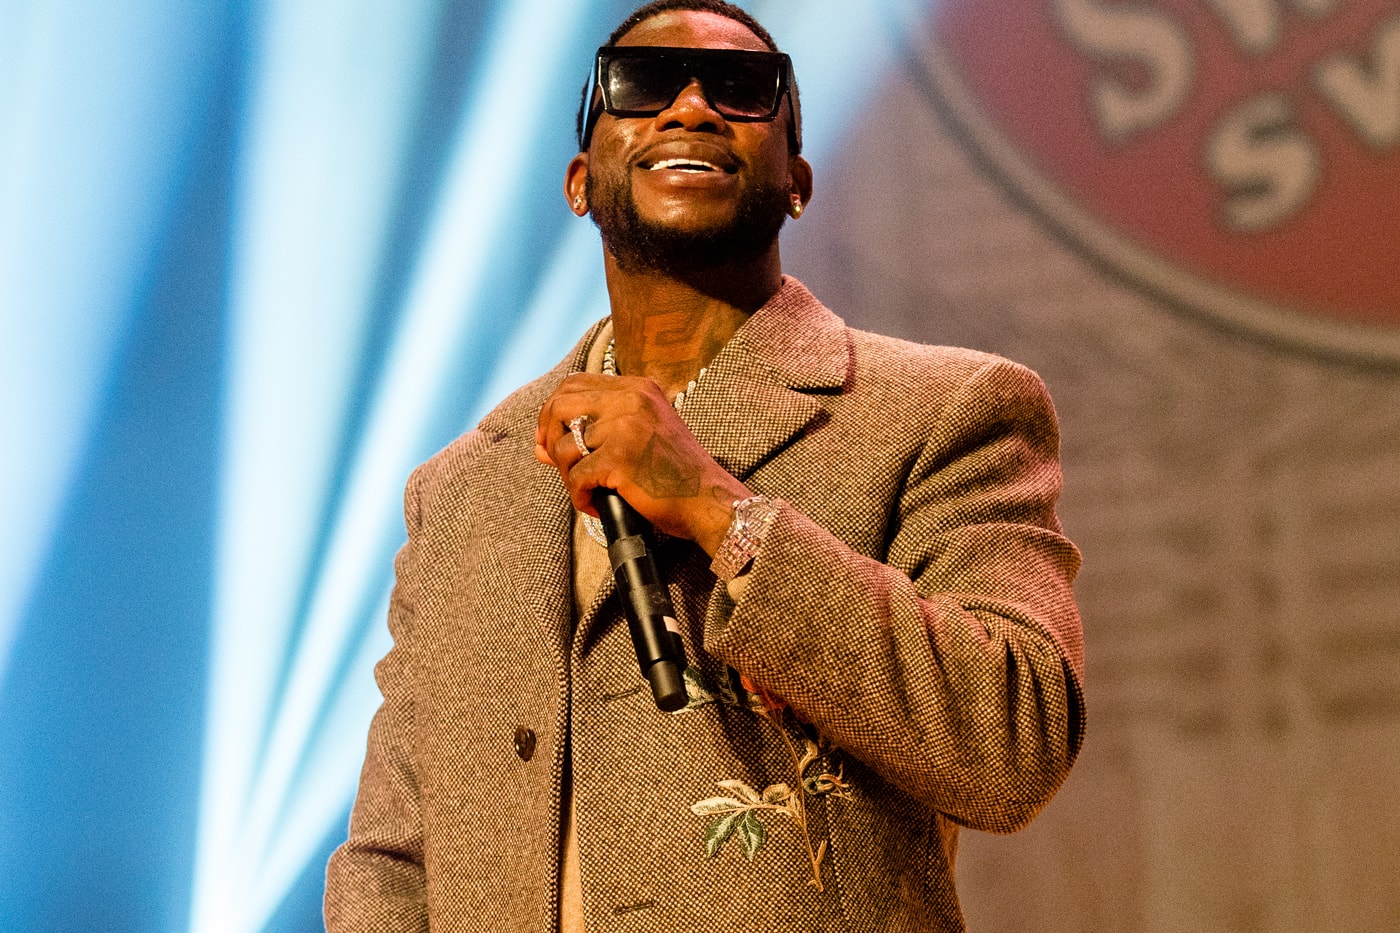 Gucci Mane Metro Boomin Drop Top Wop Hurt a Nigga Feelings Video